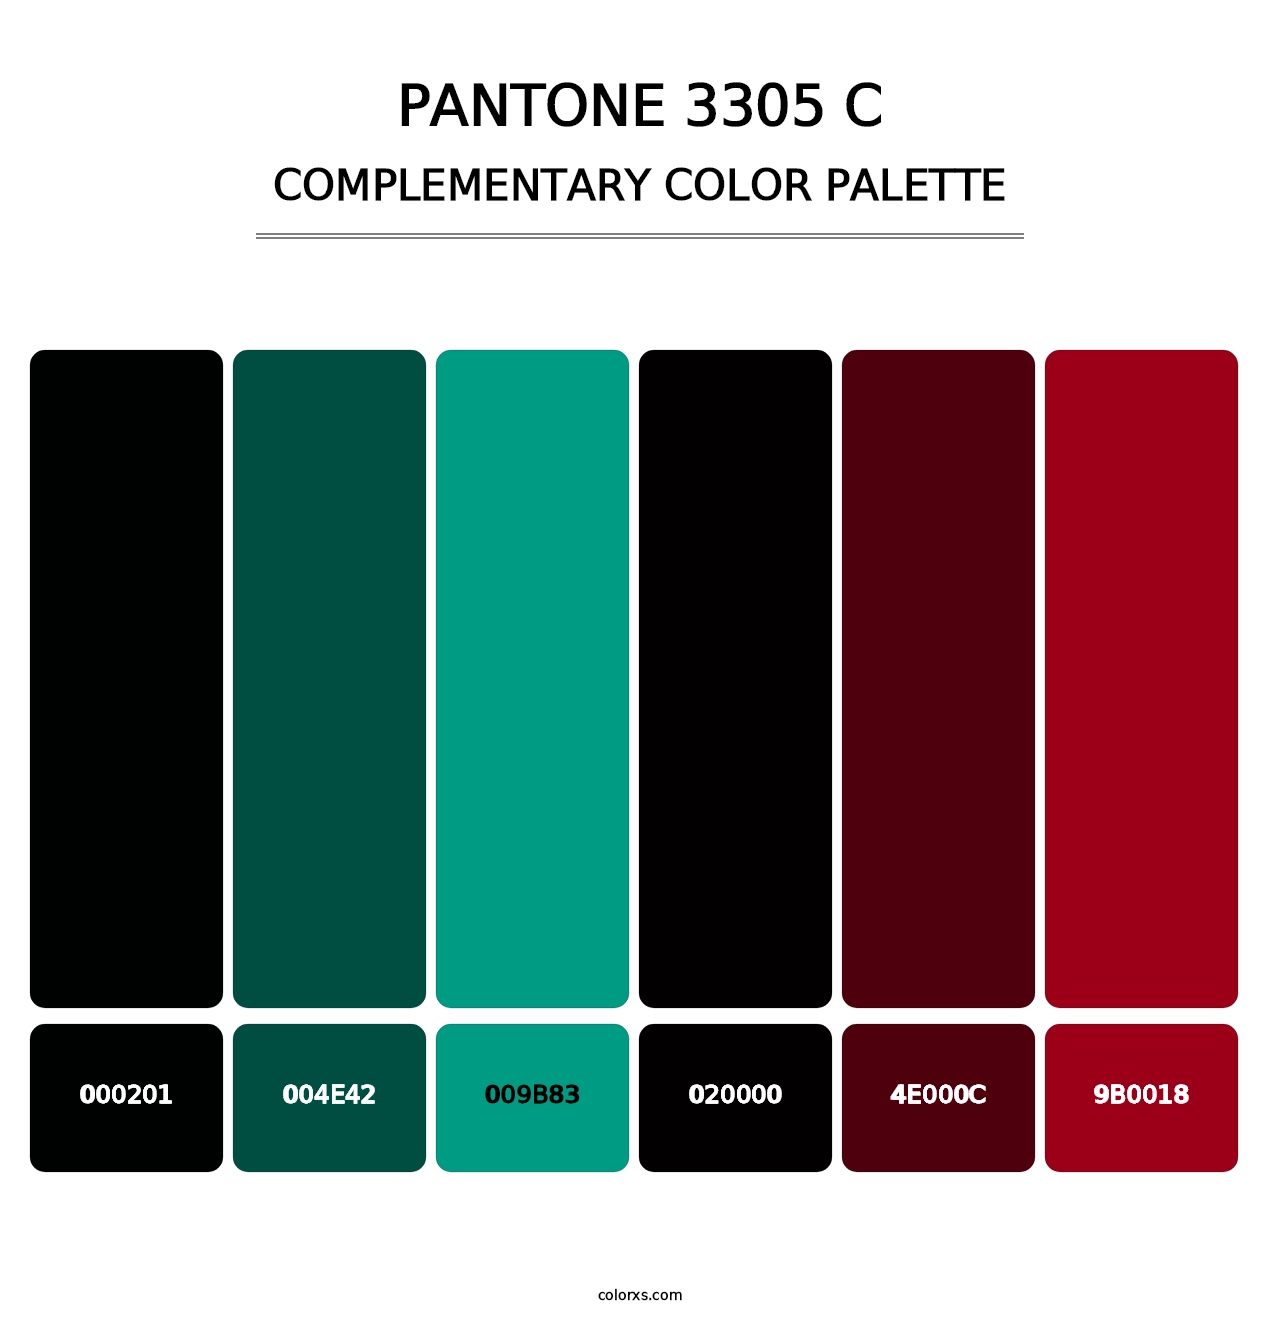 PANTONE 3305 C - Complementary Color Palette